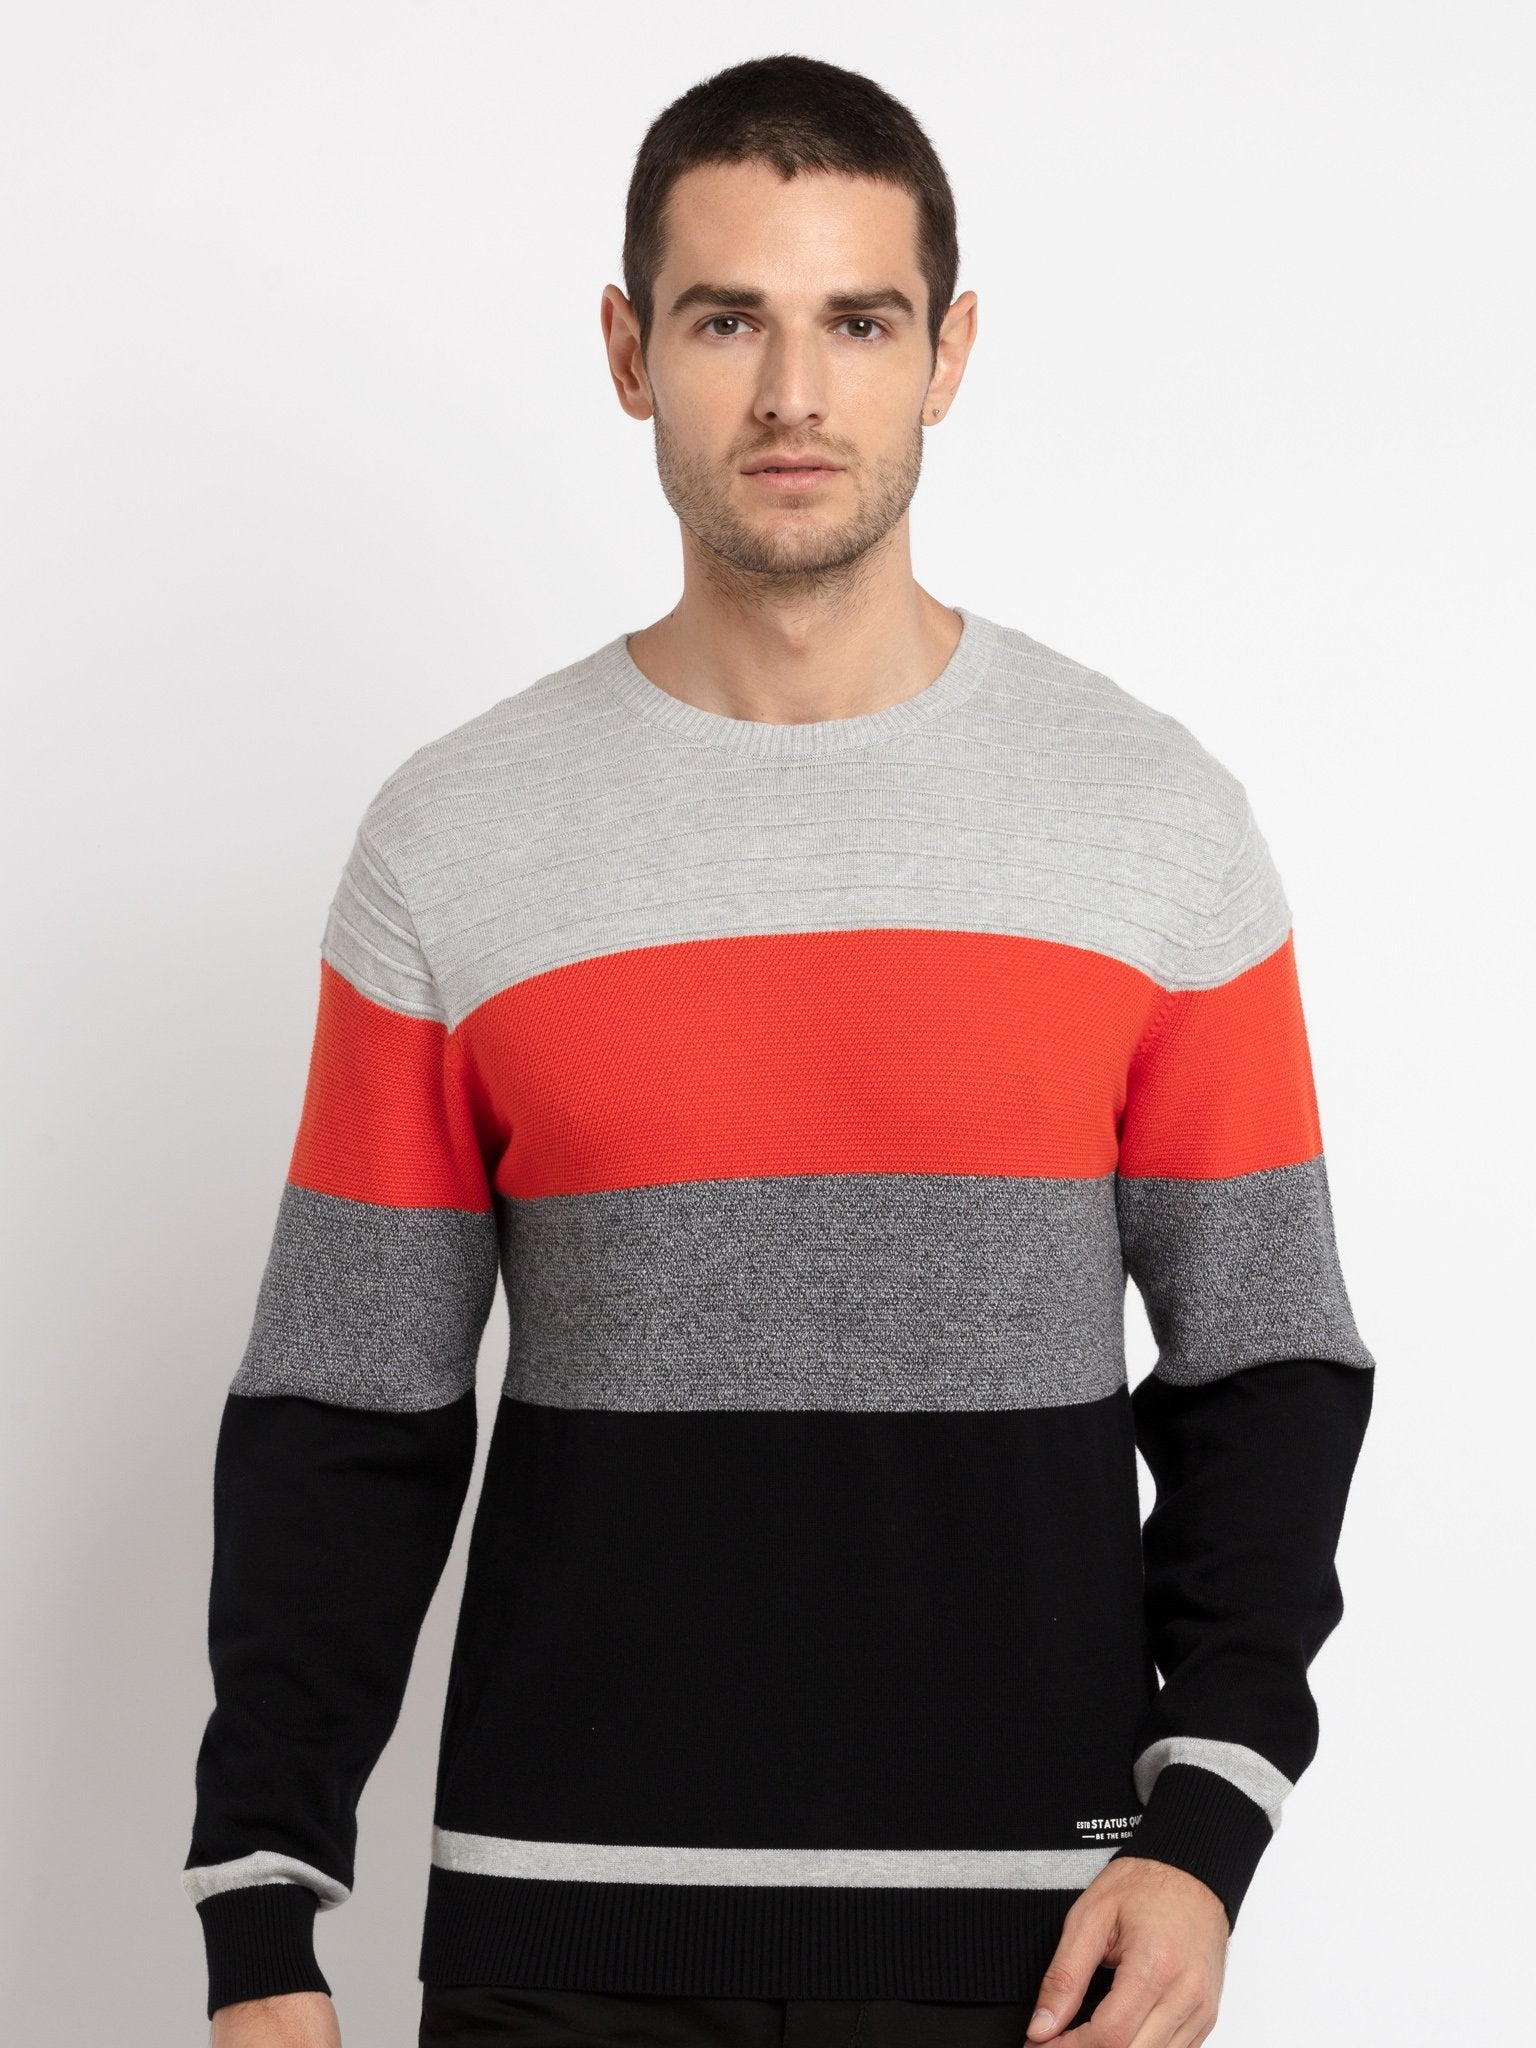 Men's Grey Acrylic Solid Sweaters